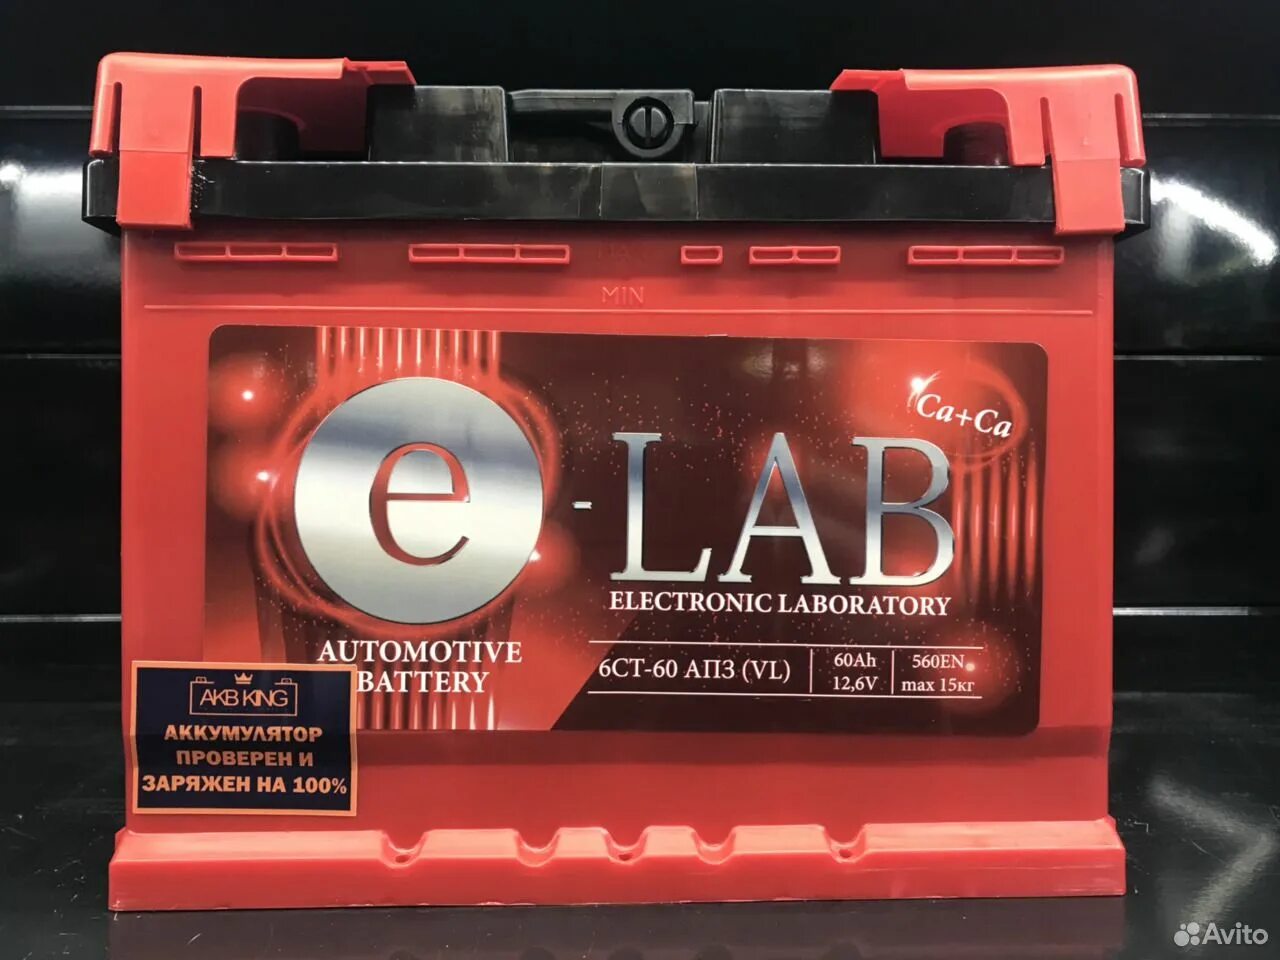 Data battery. Аккумулятор e-Lab 60 Ah п.п.. Elab АКБ 60. E-Lab 60ah. Аккумулятор e-Lab 62 Ah.